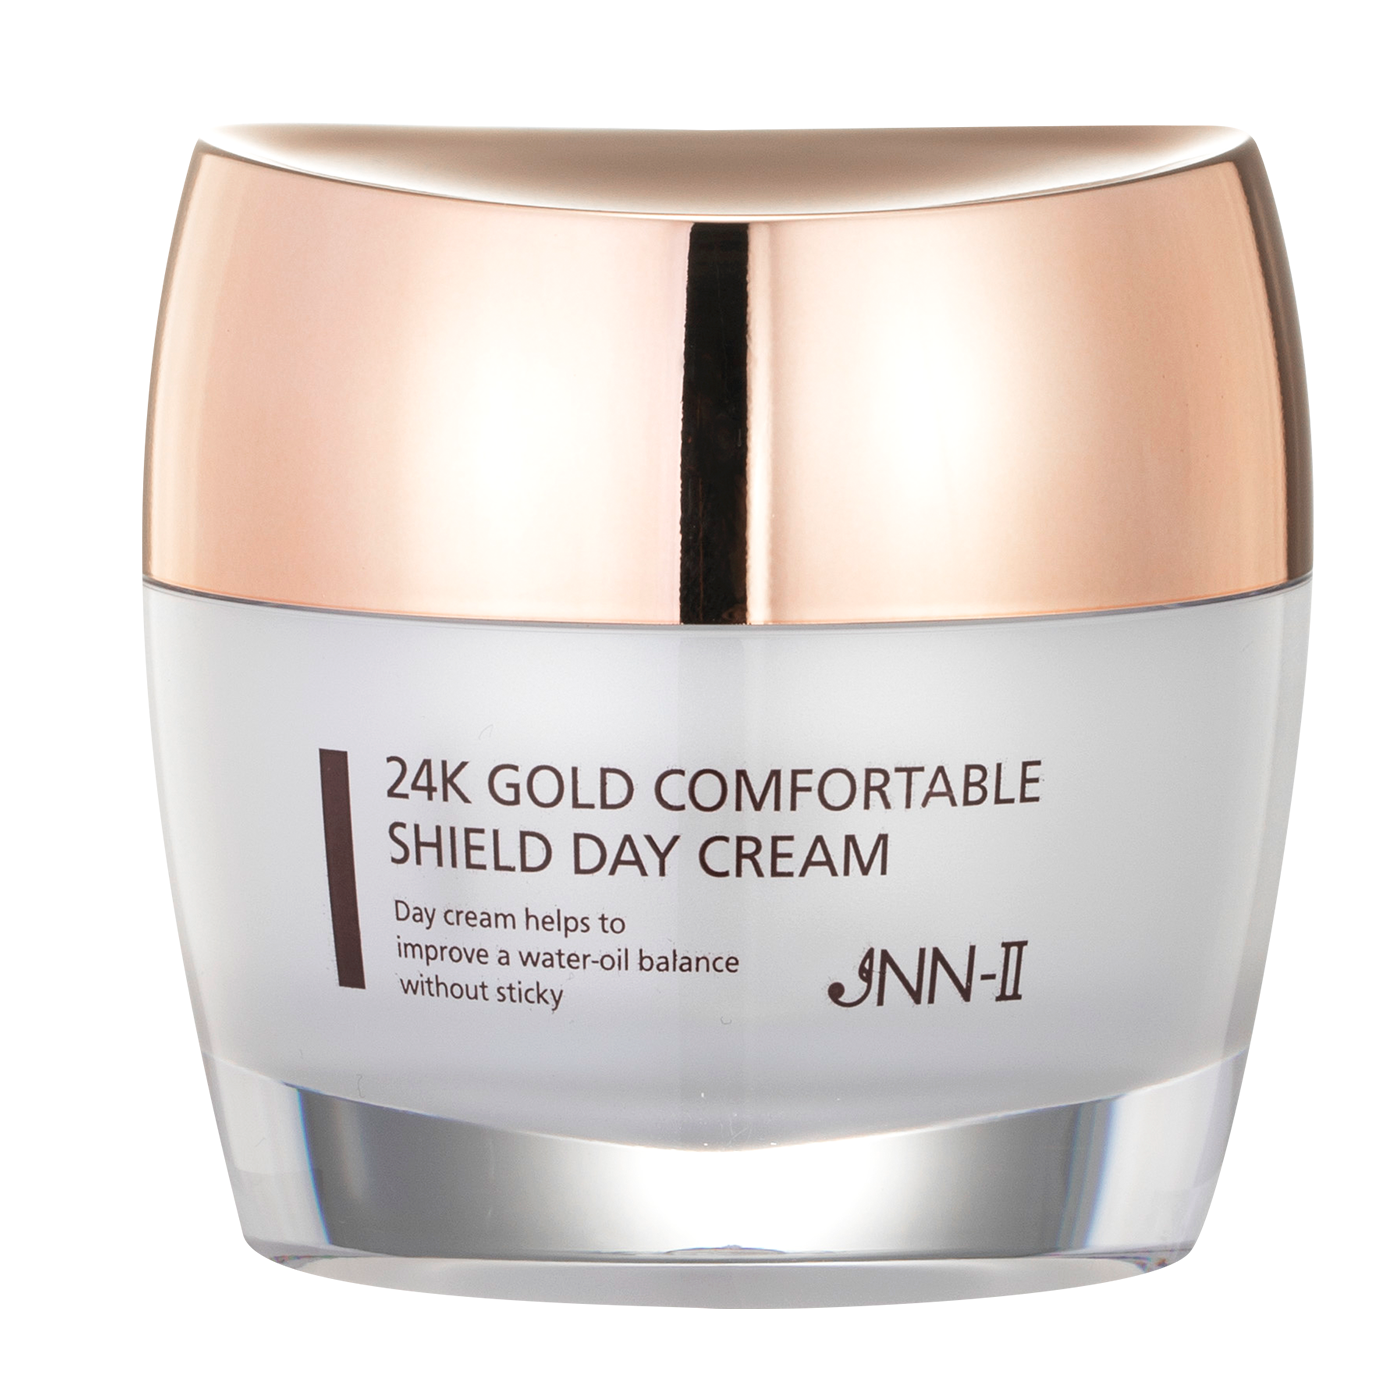 JNTU 24k Gold Compatible Shield Day Cream 50g / Moisturizing barrier formed